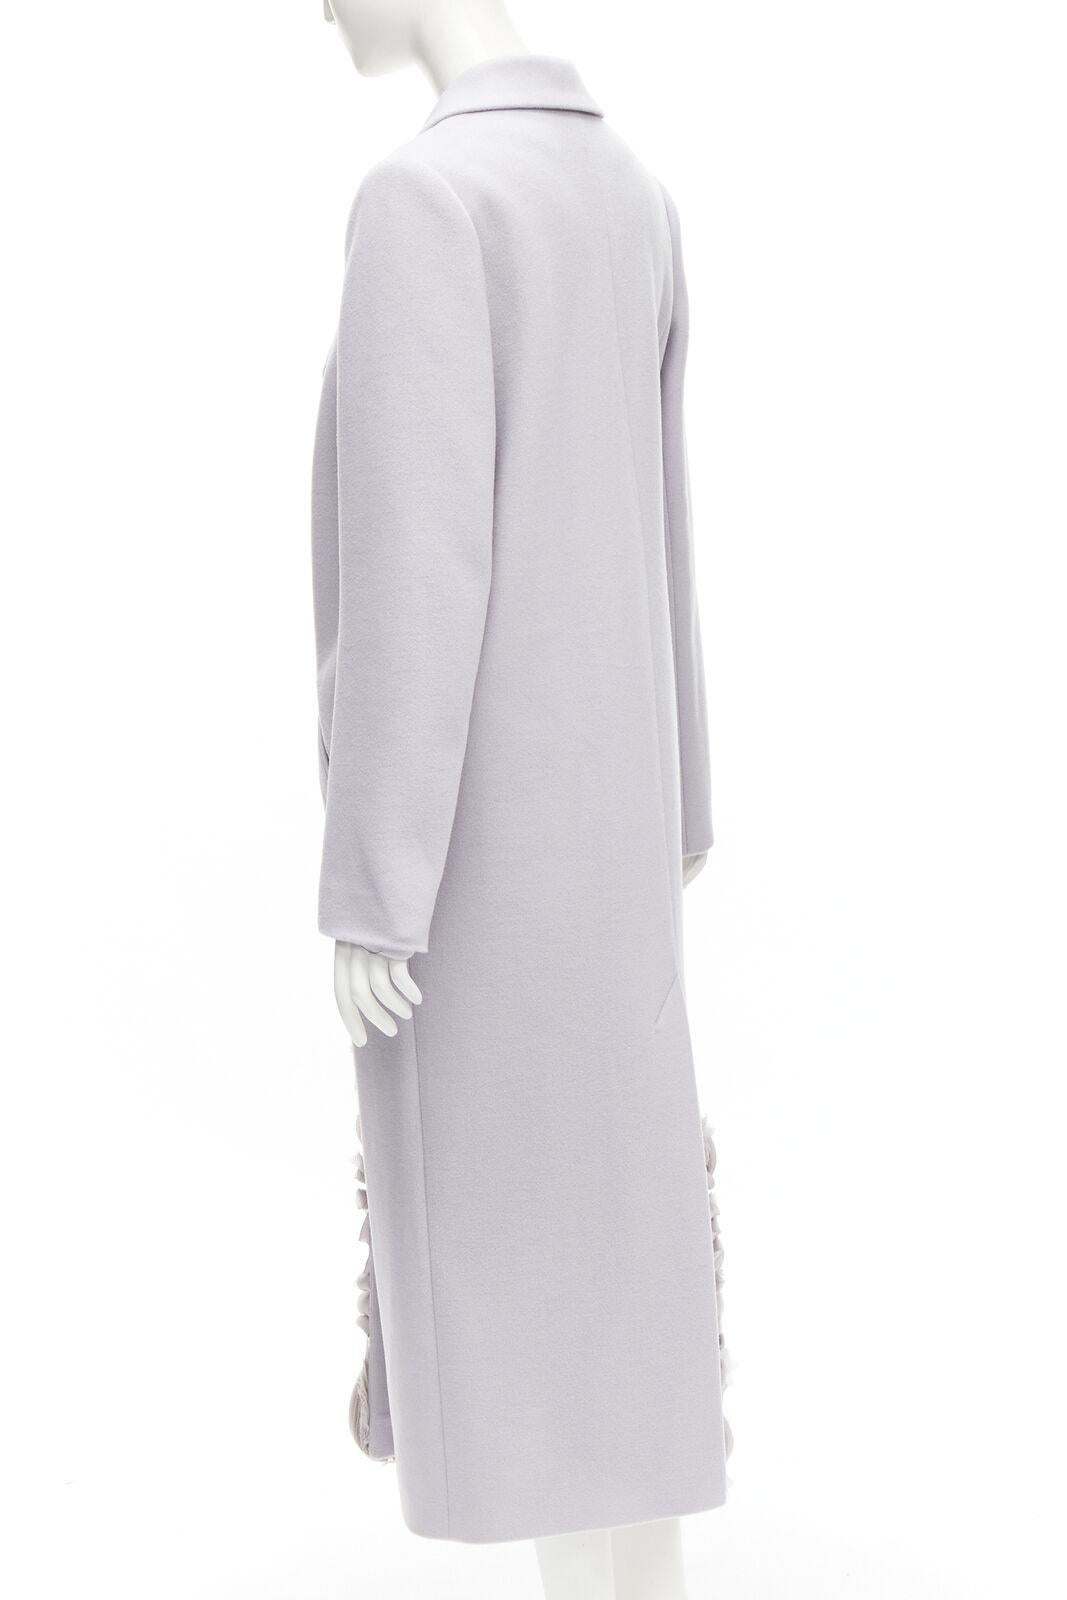 RUBAN ATELIER 100% cashmere lilac grey ruffle applique oversized coat XS For Sale 1